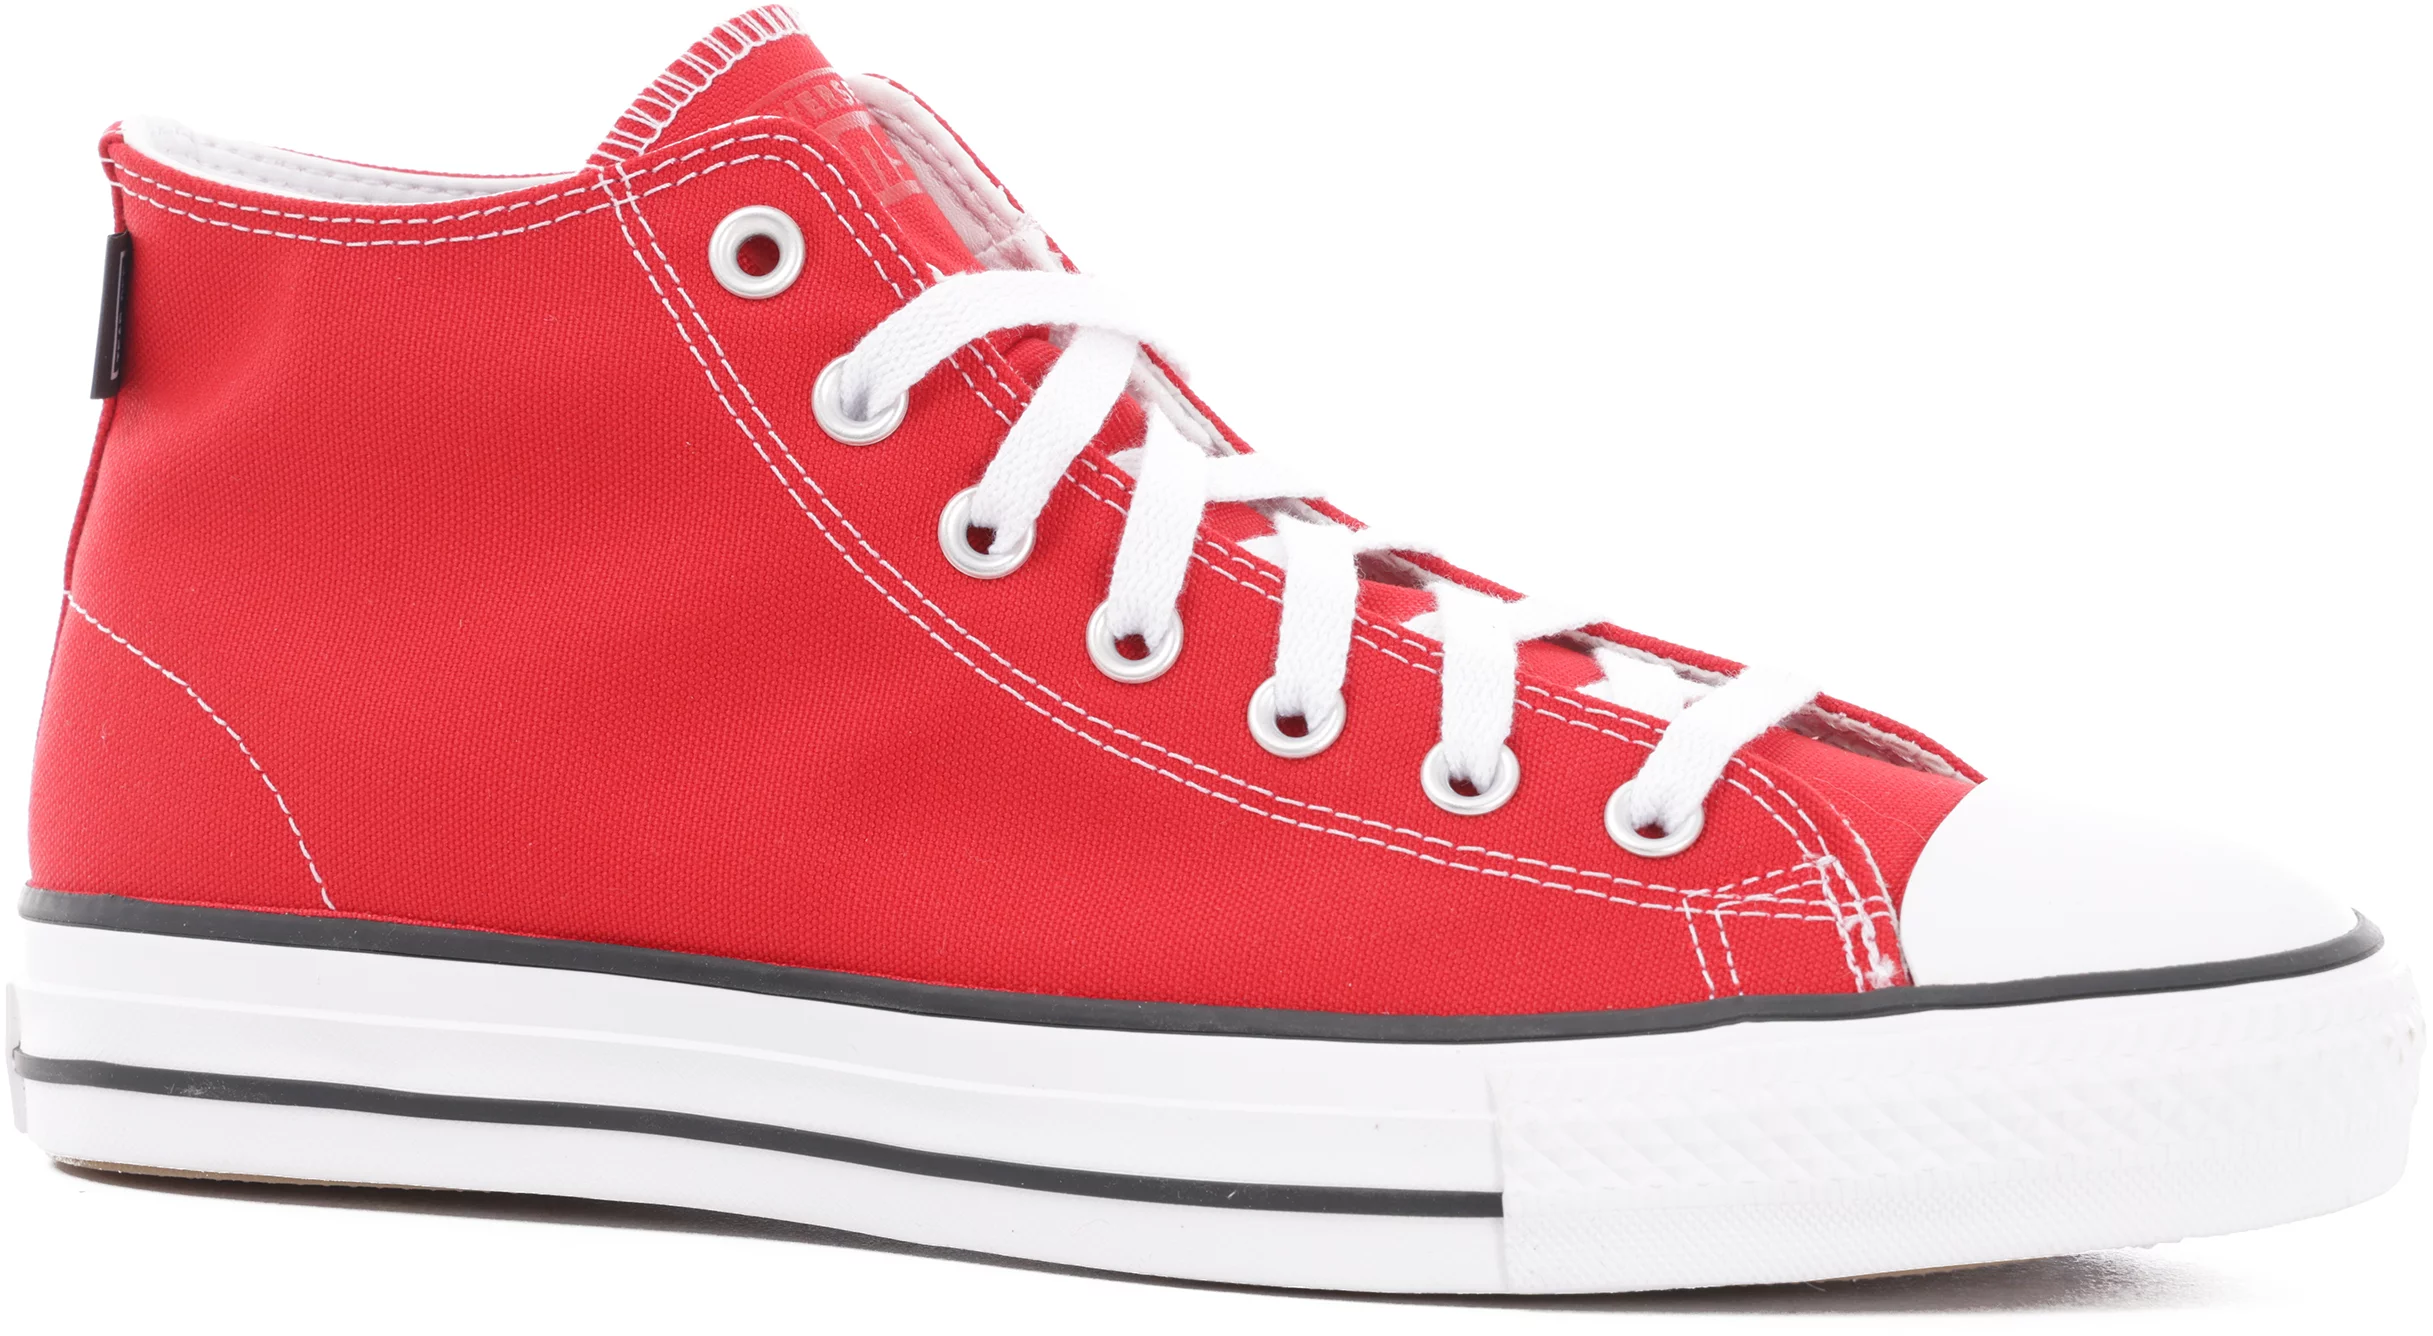 Piraat de ober bevel Converse Chuck Taylor All Star Pro Mid Skate Shoes - university red/white/black  | Tactics